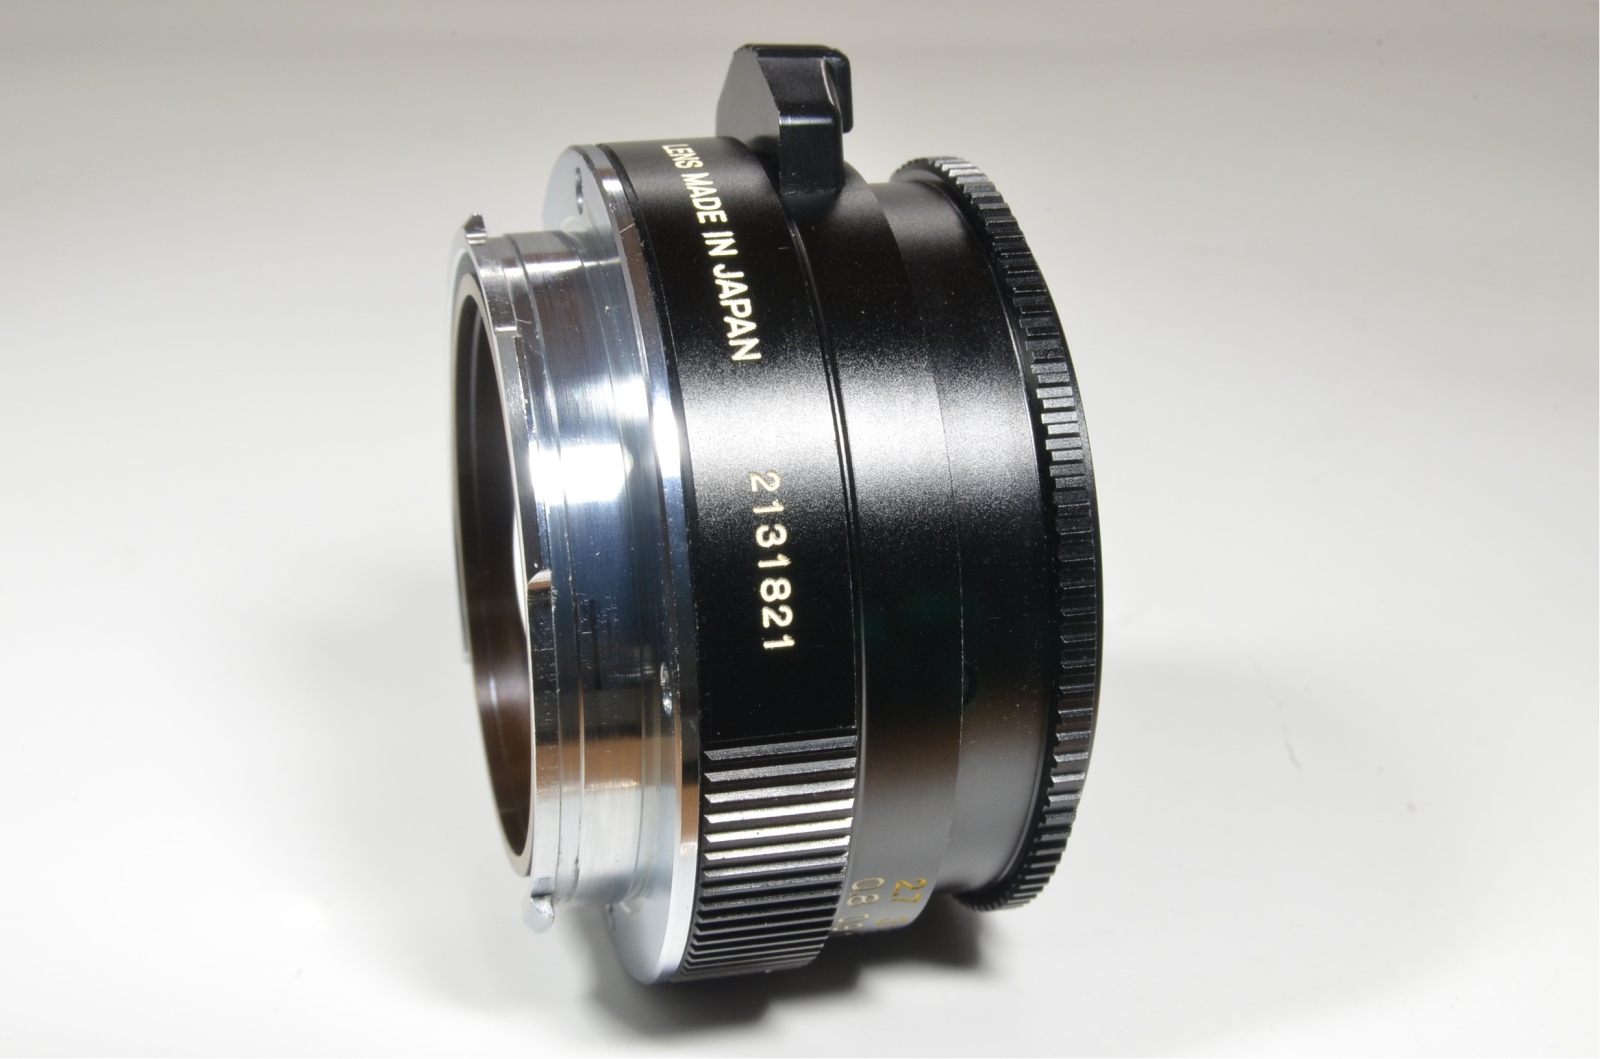 minolta cle film camera, m-rokkor 40mm, 28mm, 90mm, flash and grip